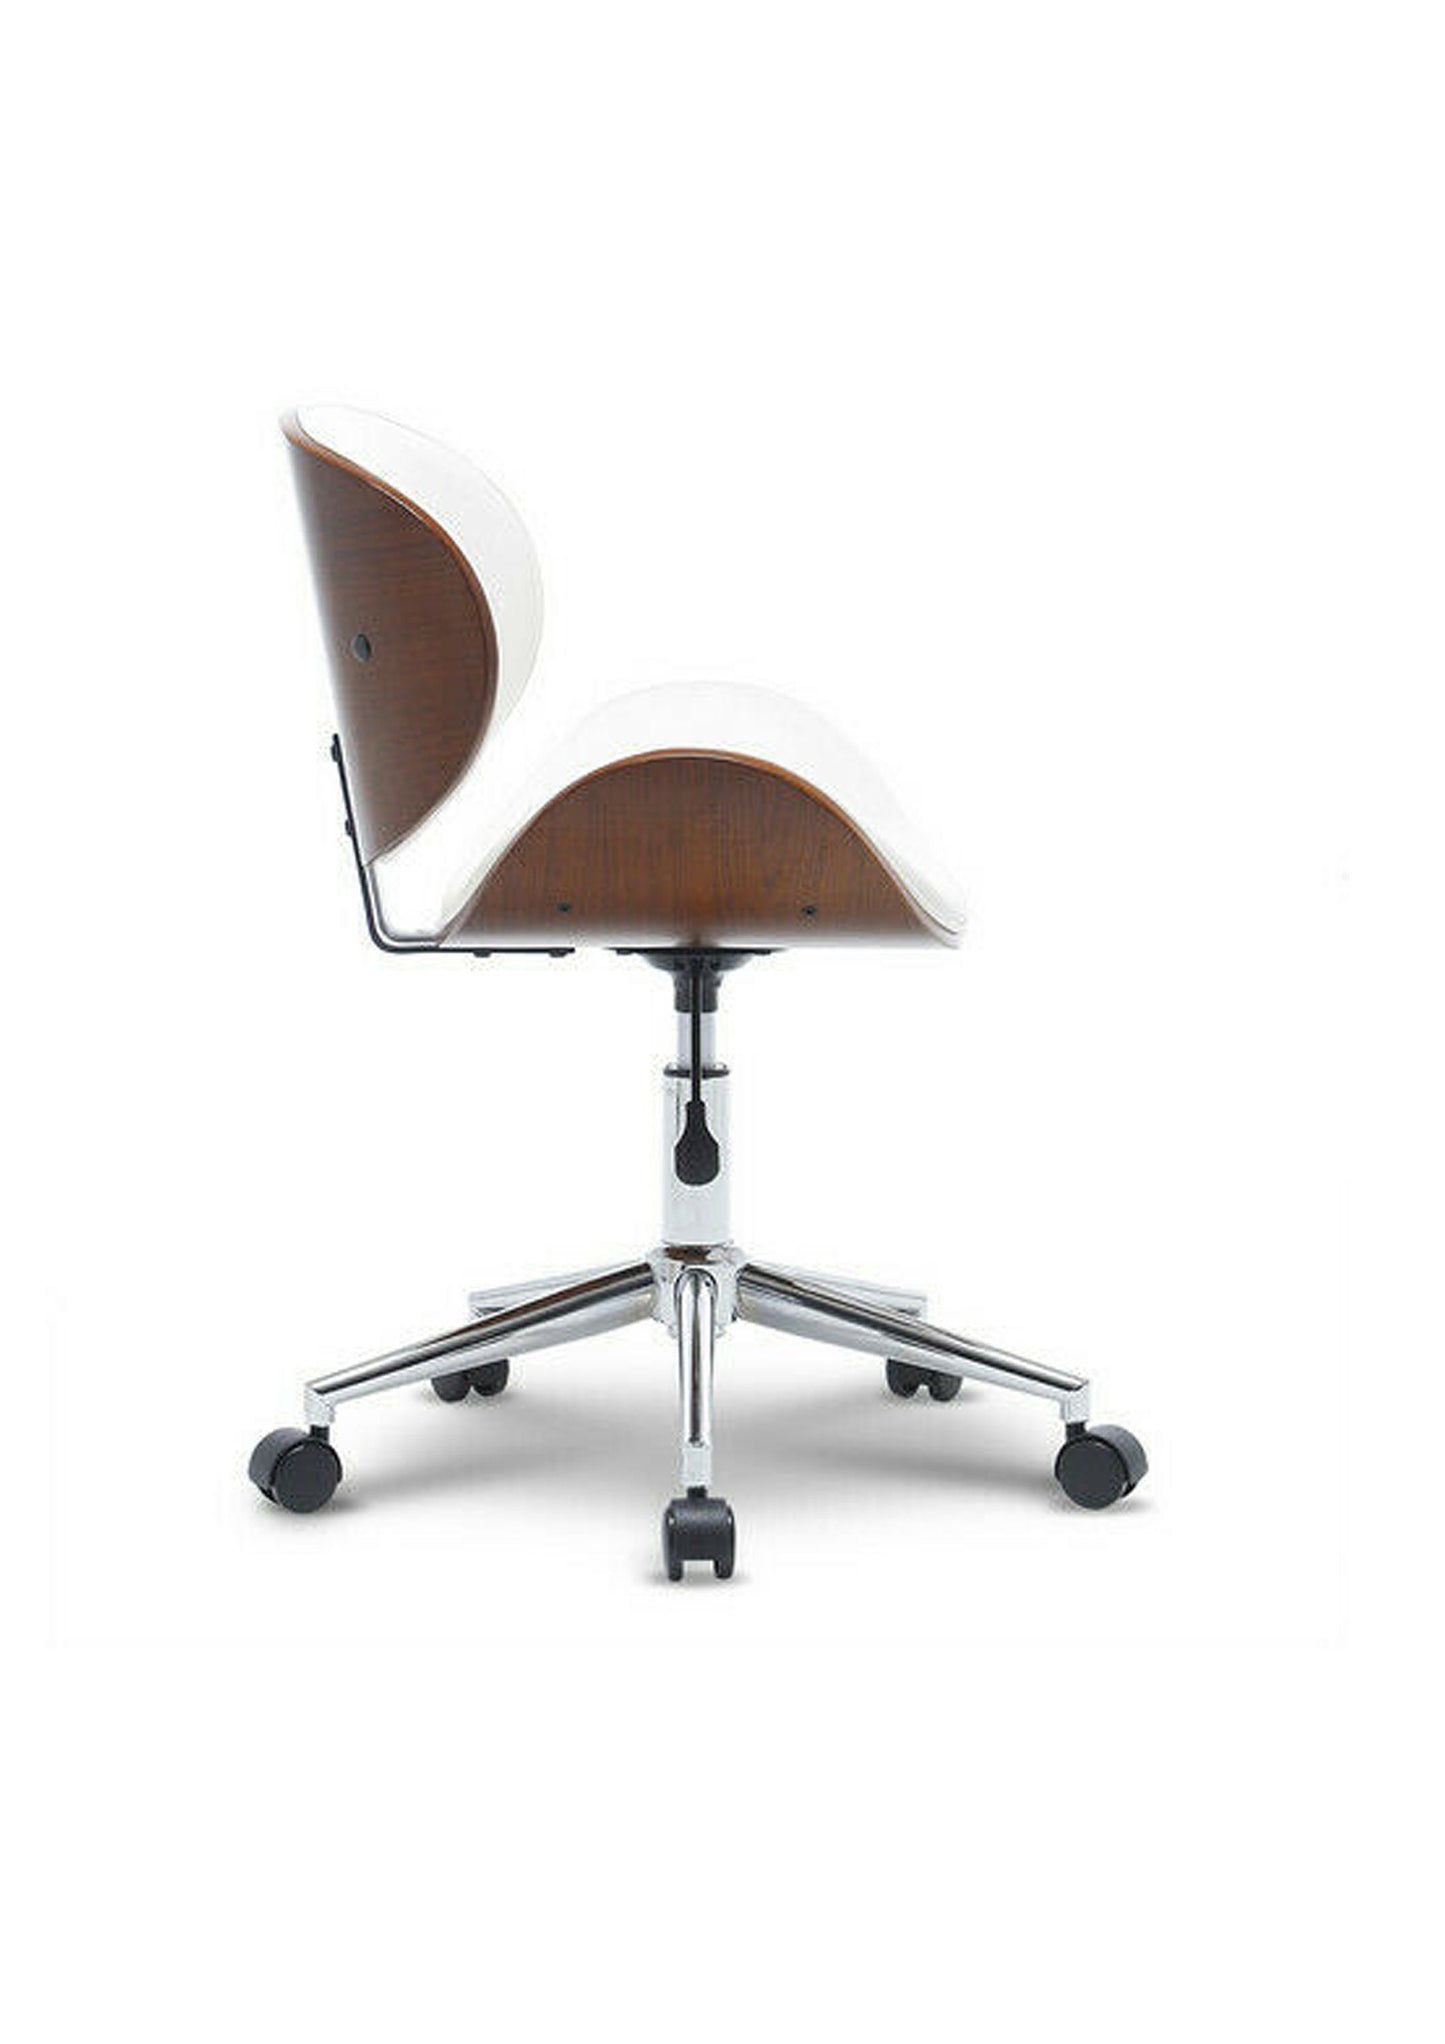 Retro Style Adjustable Swivel office desk chair White and Chestnut Veneer Wood